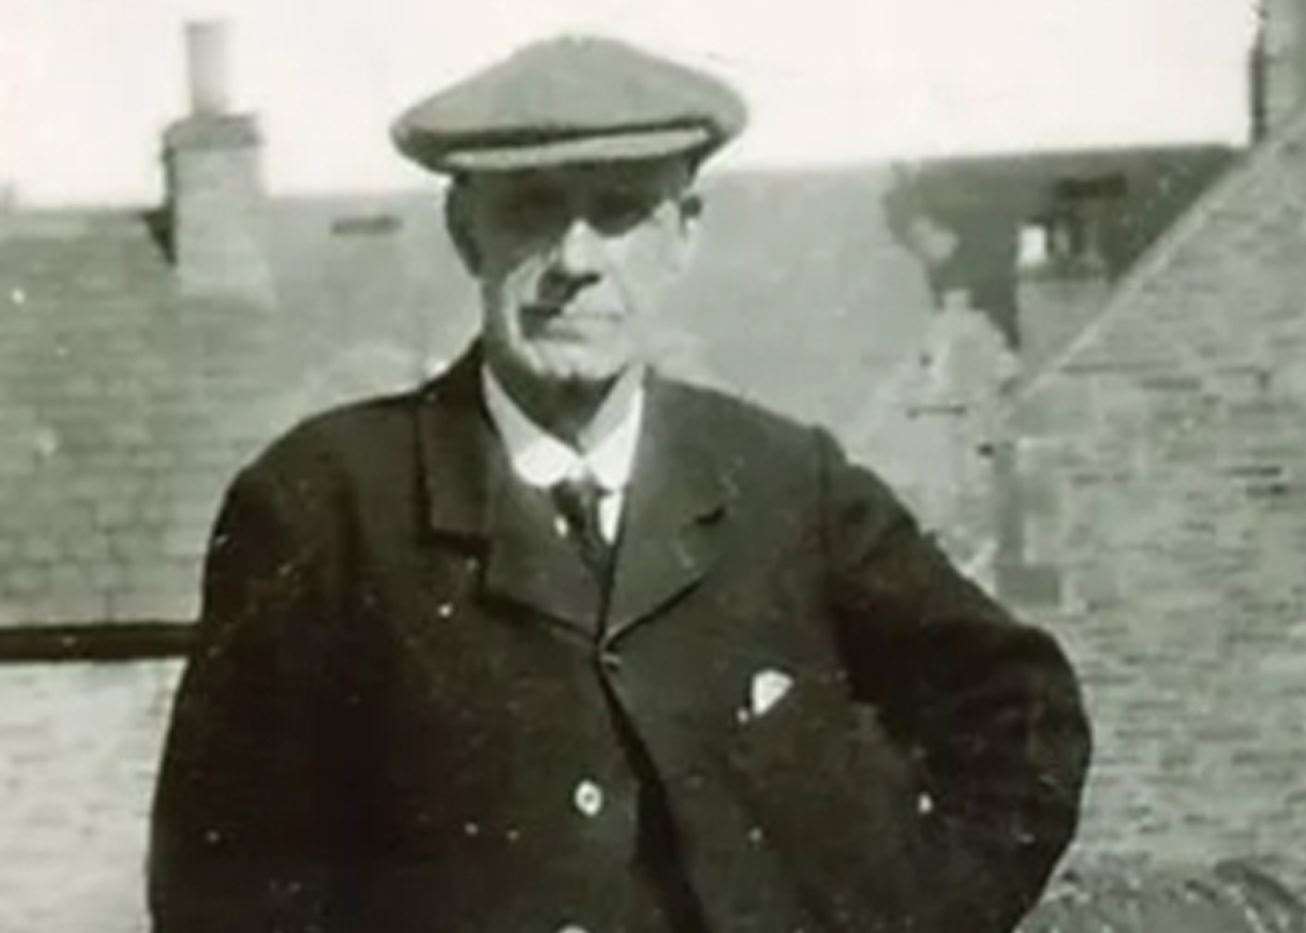 Marwood Sutherland standing in Olrig Street around 1930.